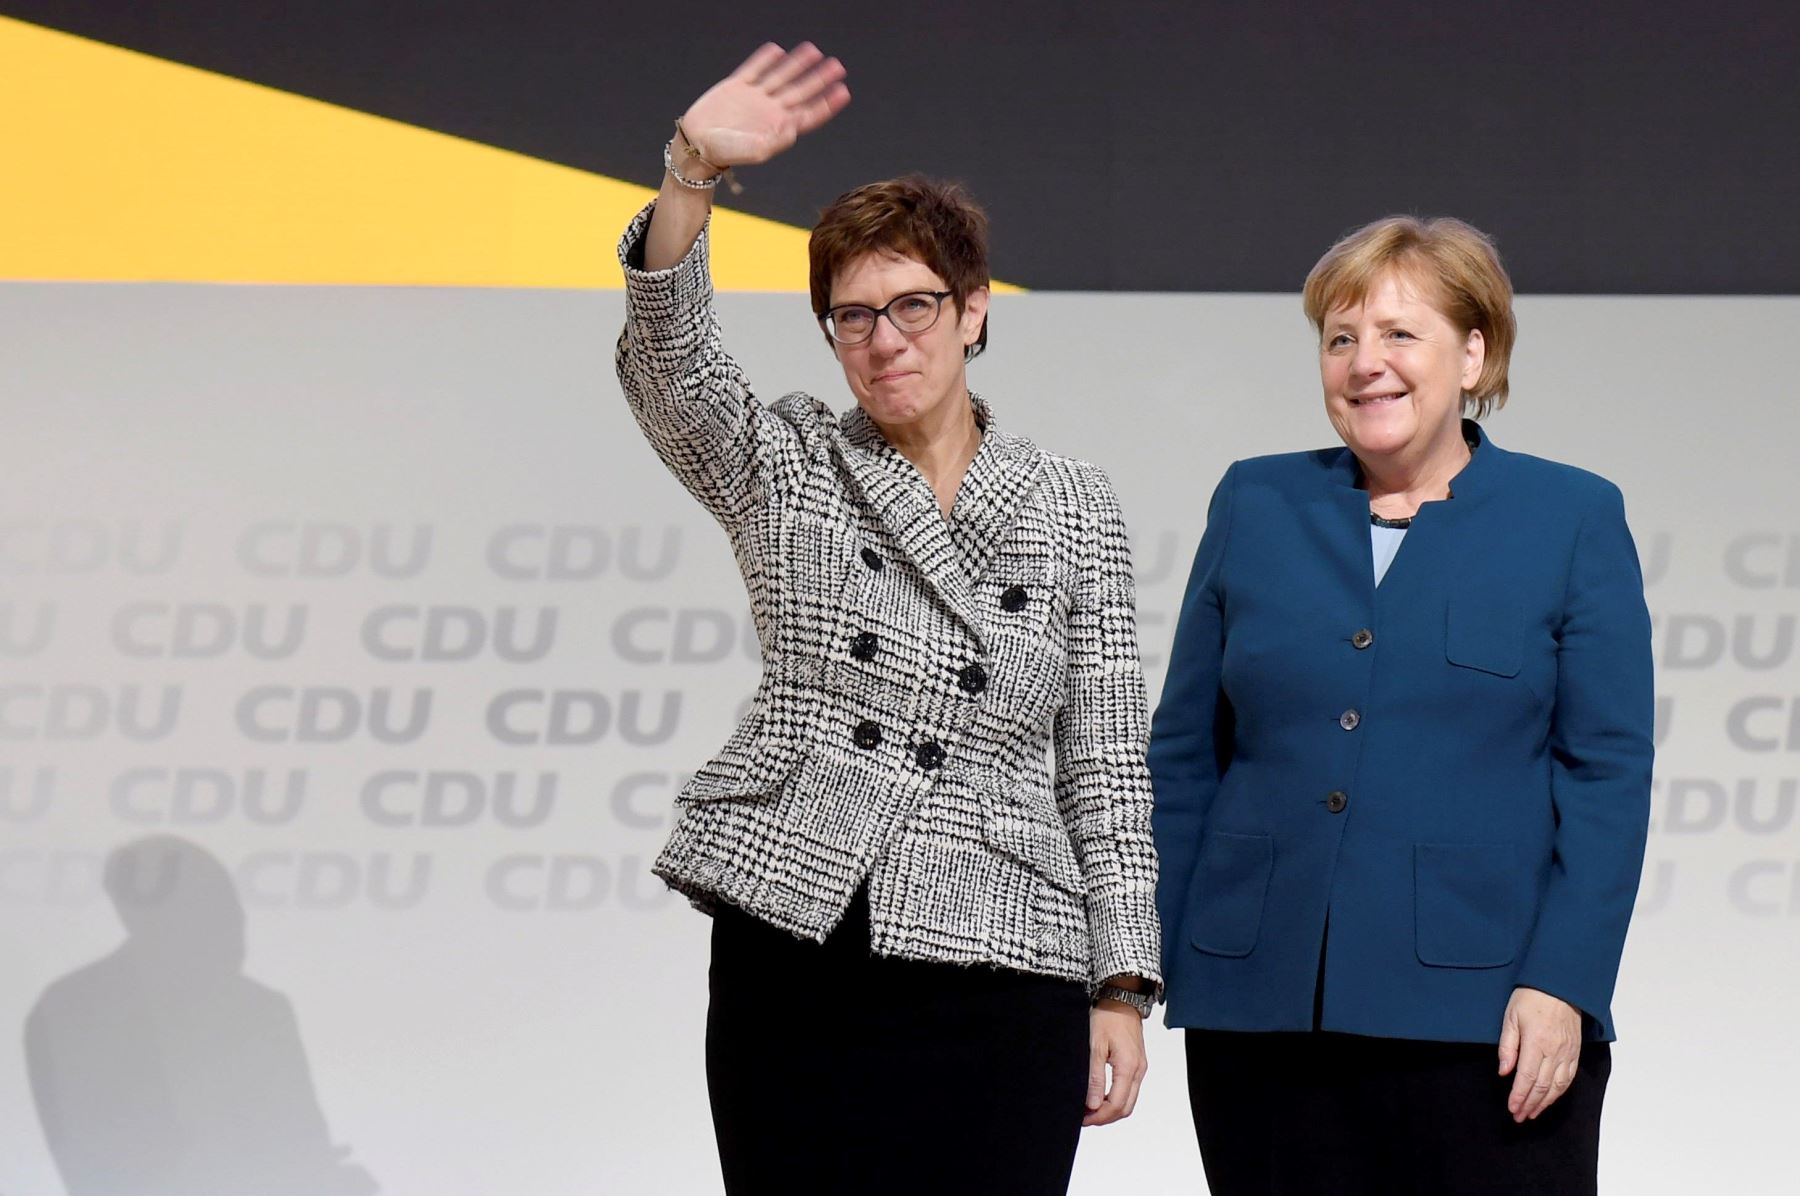 La centrista Kramp-Karrenbauer sucede a Merkel en la CDU por mínimo margen